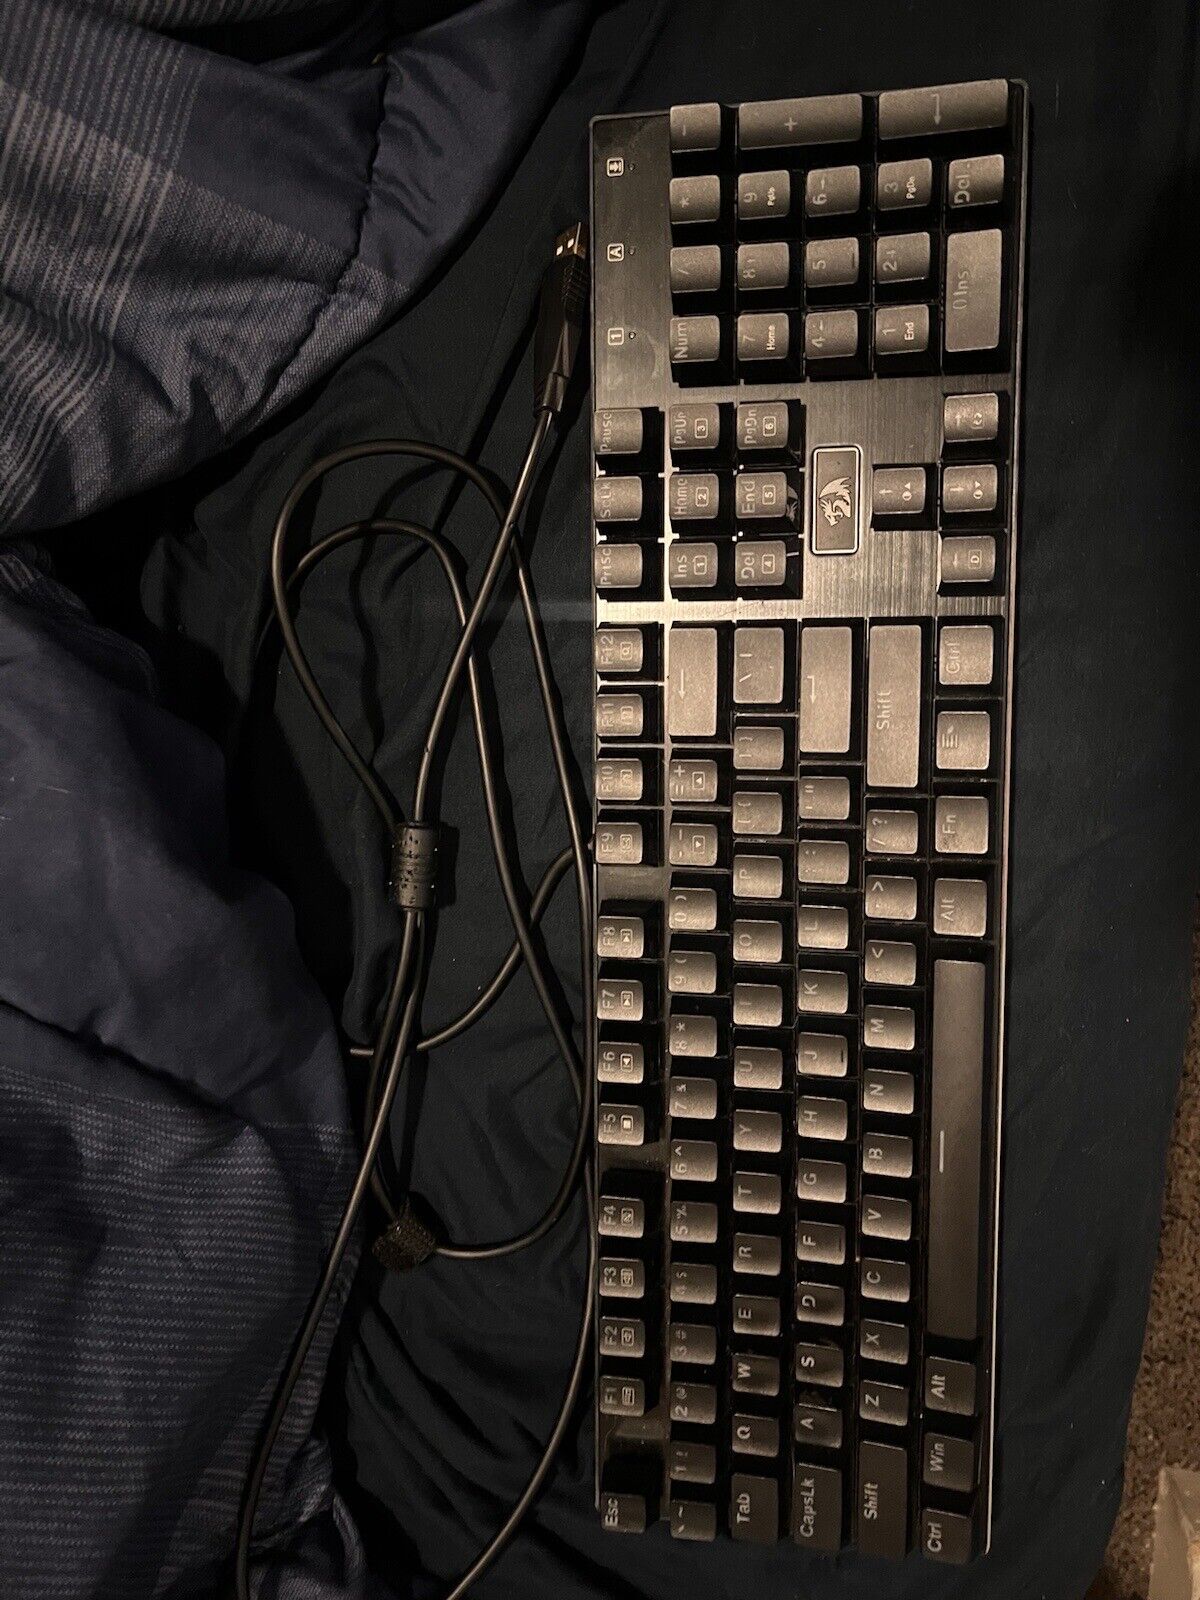 RedDragon Mechanical Gaming Keyboard K556 RGB. High Quality LED.